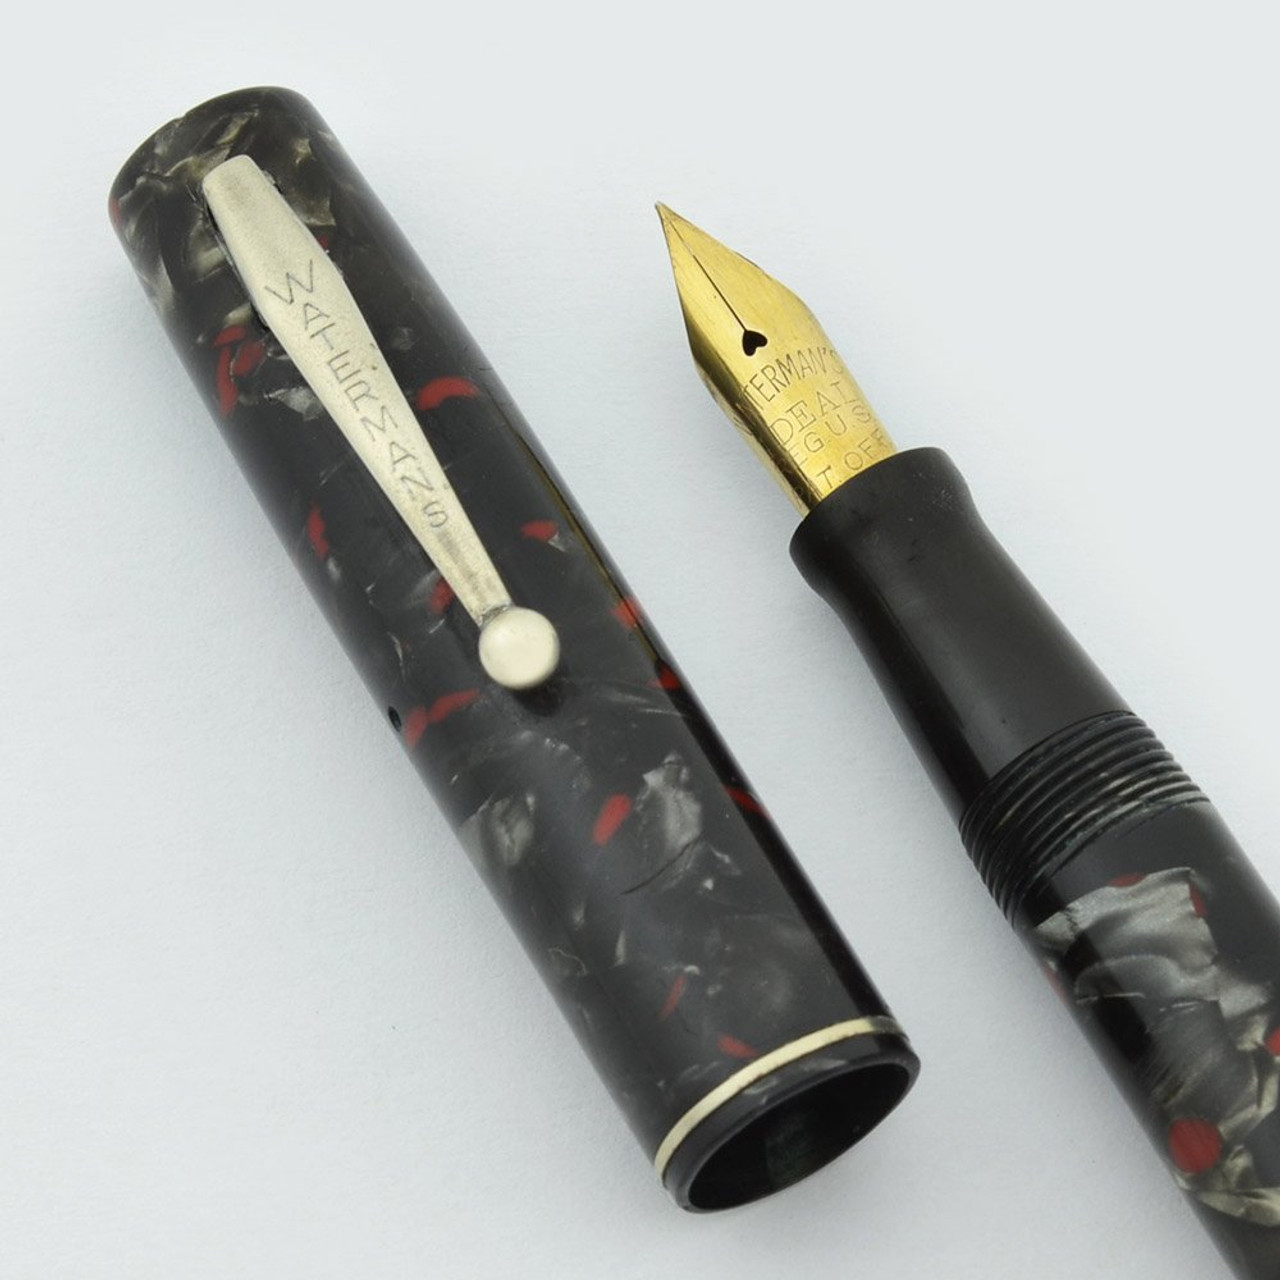 Waterman 3 Fountain Pen  - Grey Black w Red Specks, Chrome Trim, Extra Fine Flex Nib (Excellent, Restored)